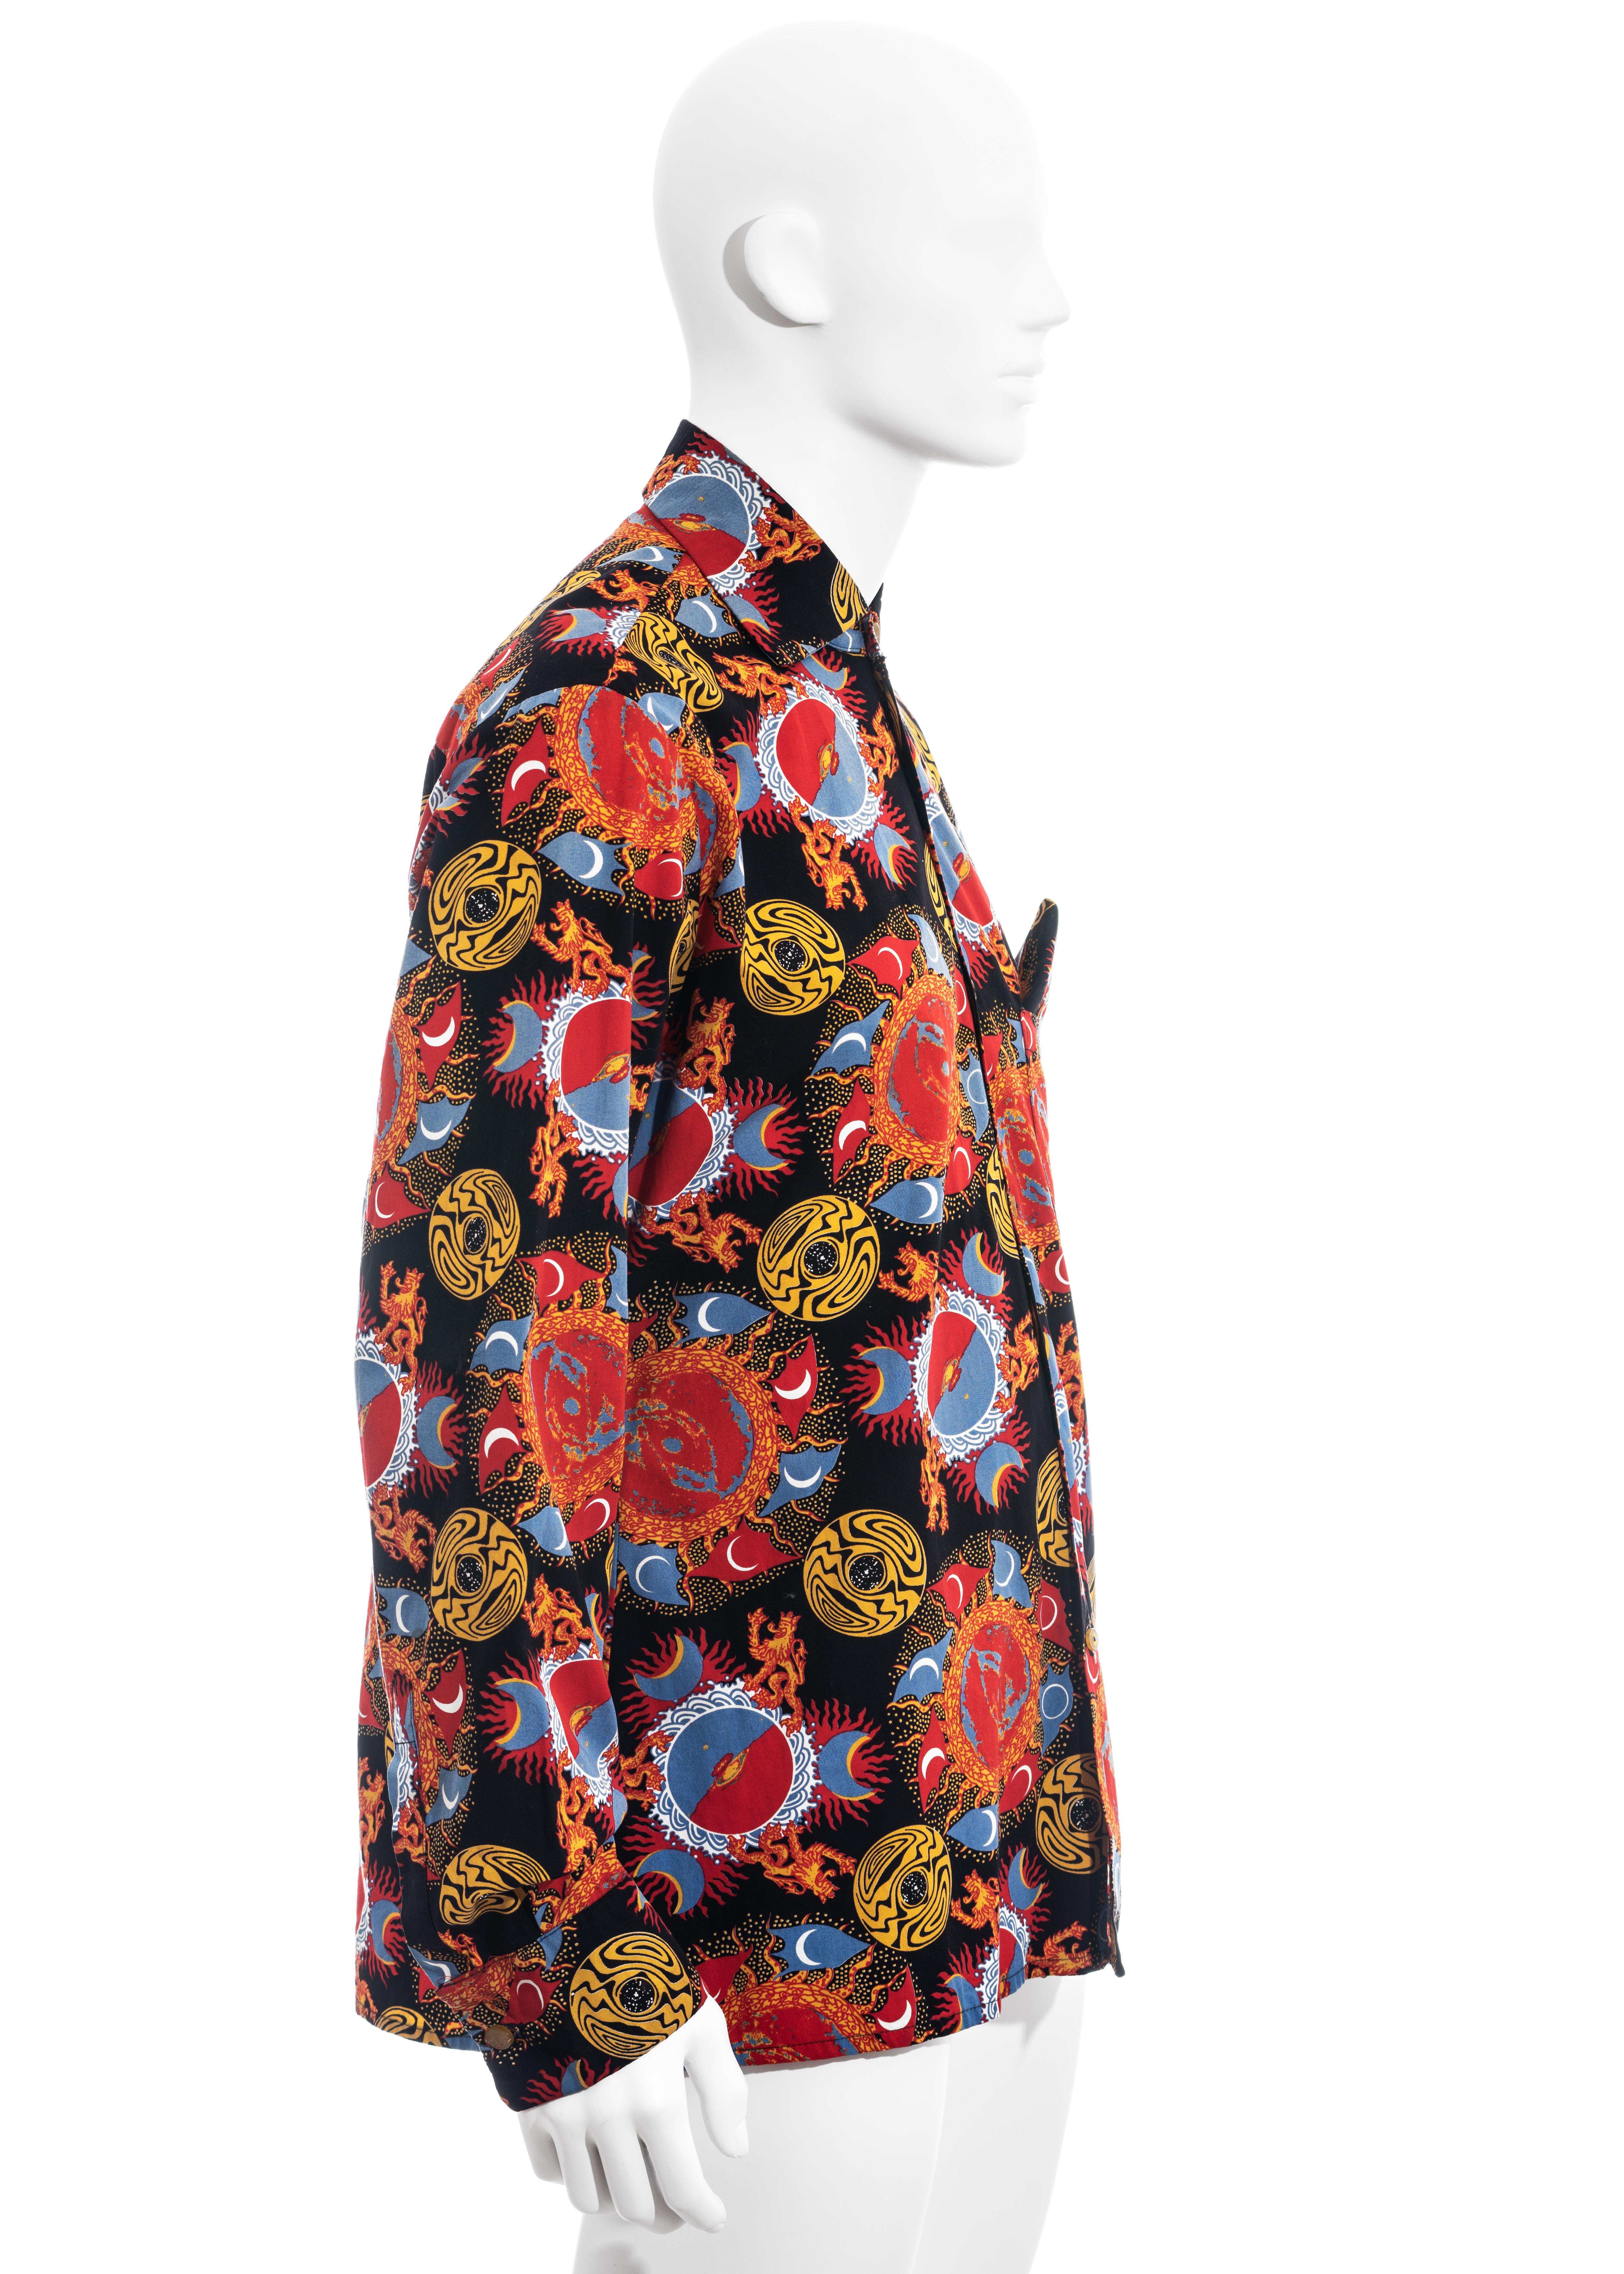 Black Men's Vivienne Westwood galaxy print cotton shirt and pocket square, ss 1988